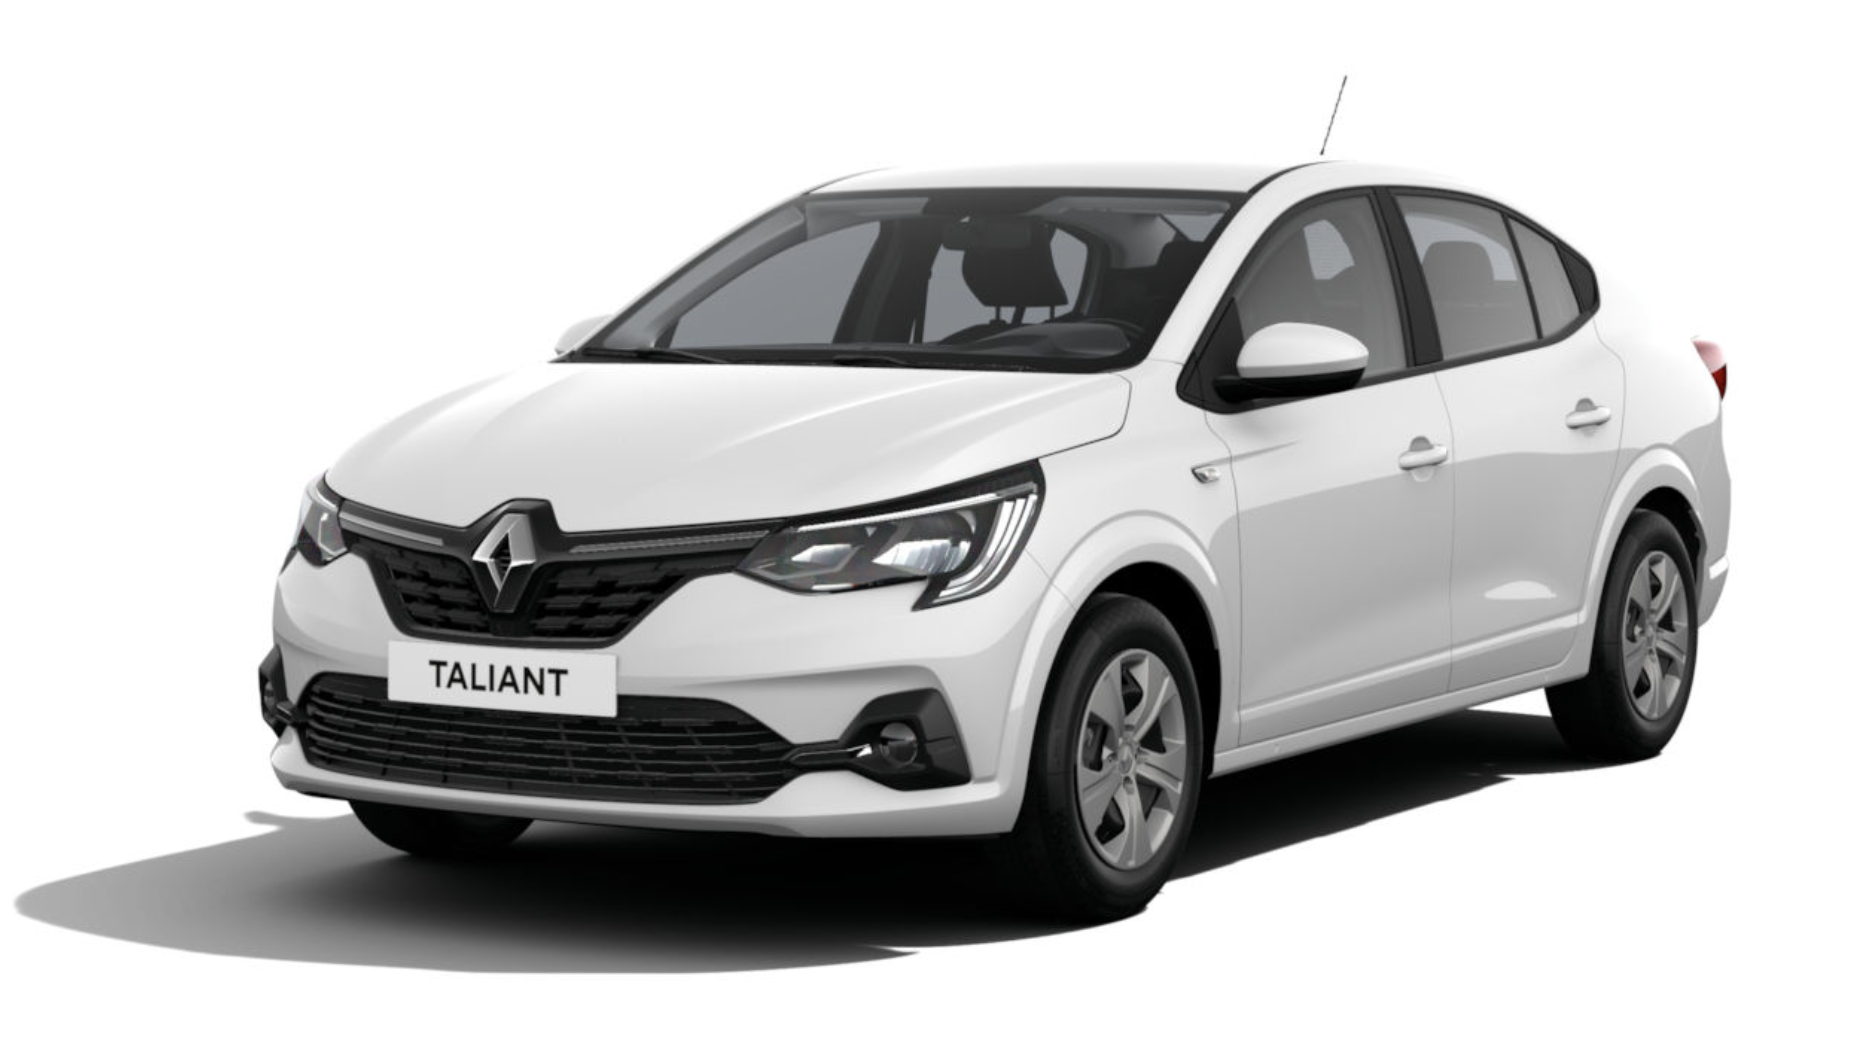 Renault Renault Taliant